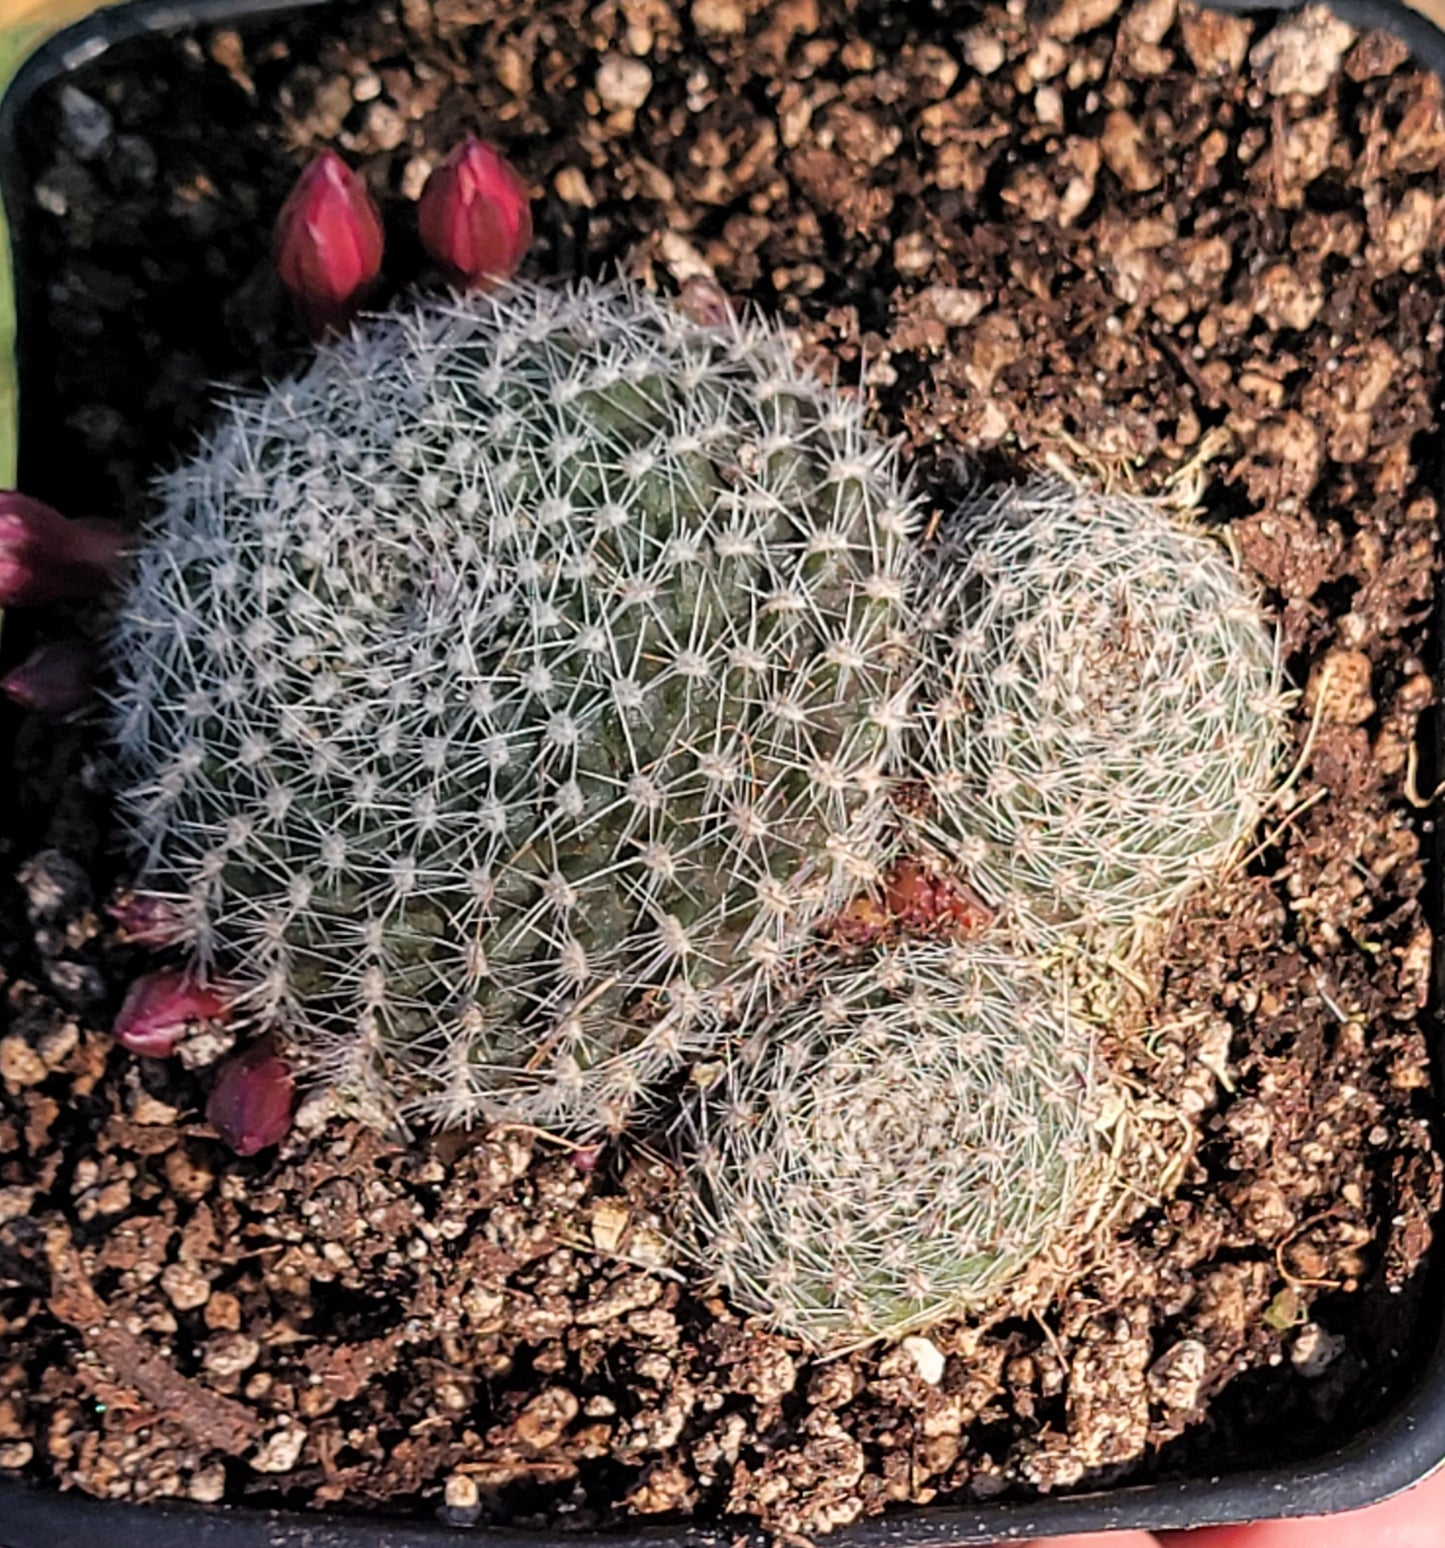 Rebutia Minuscula 'Cactus de corona roja'